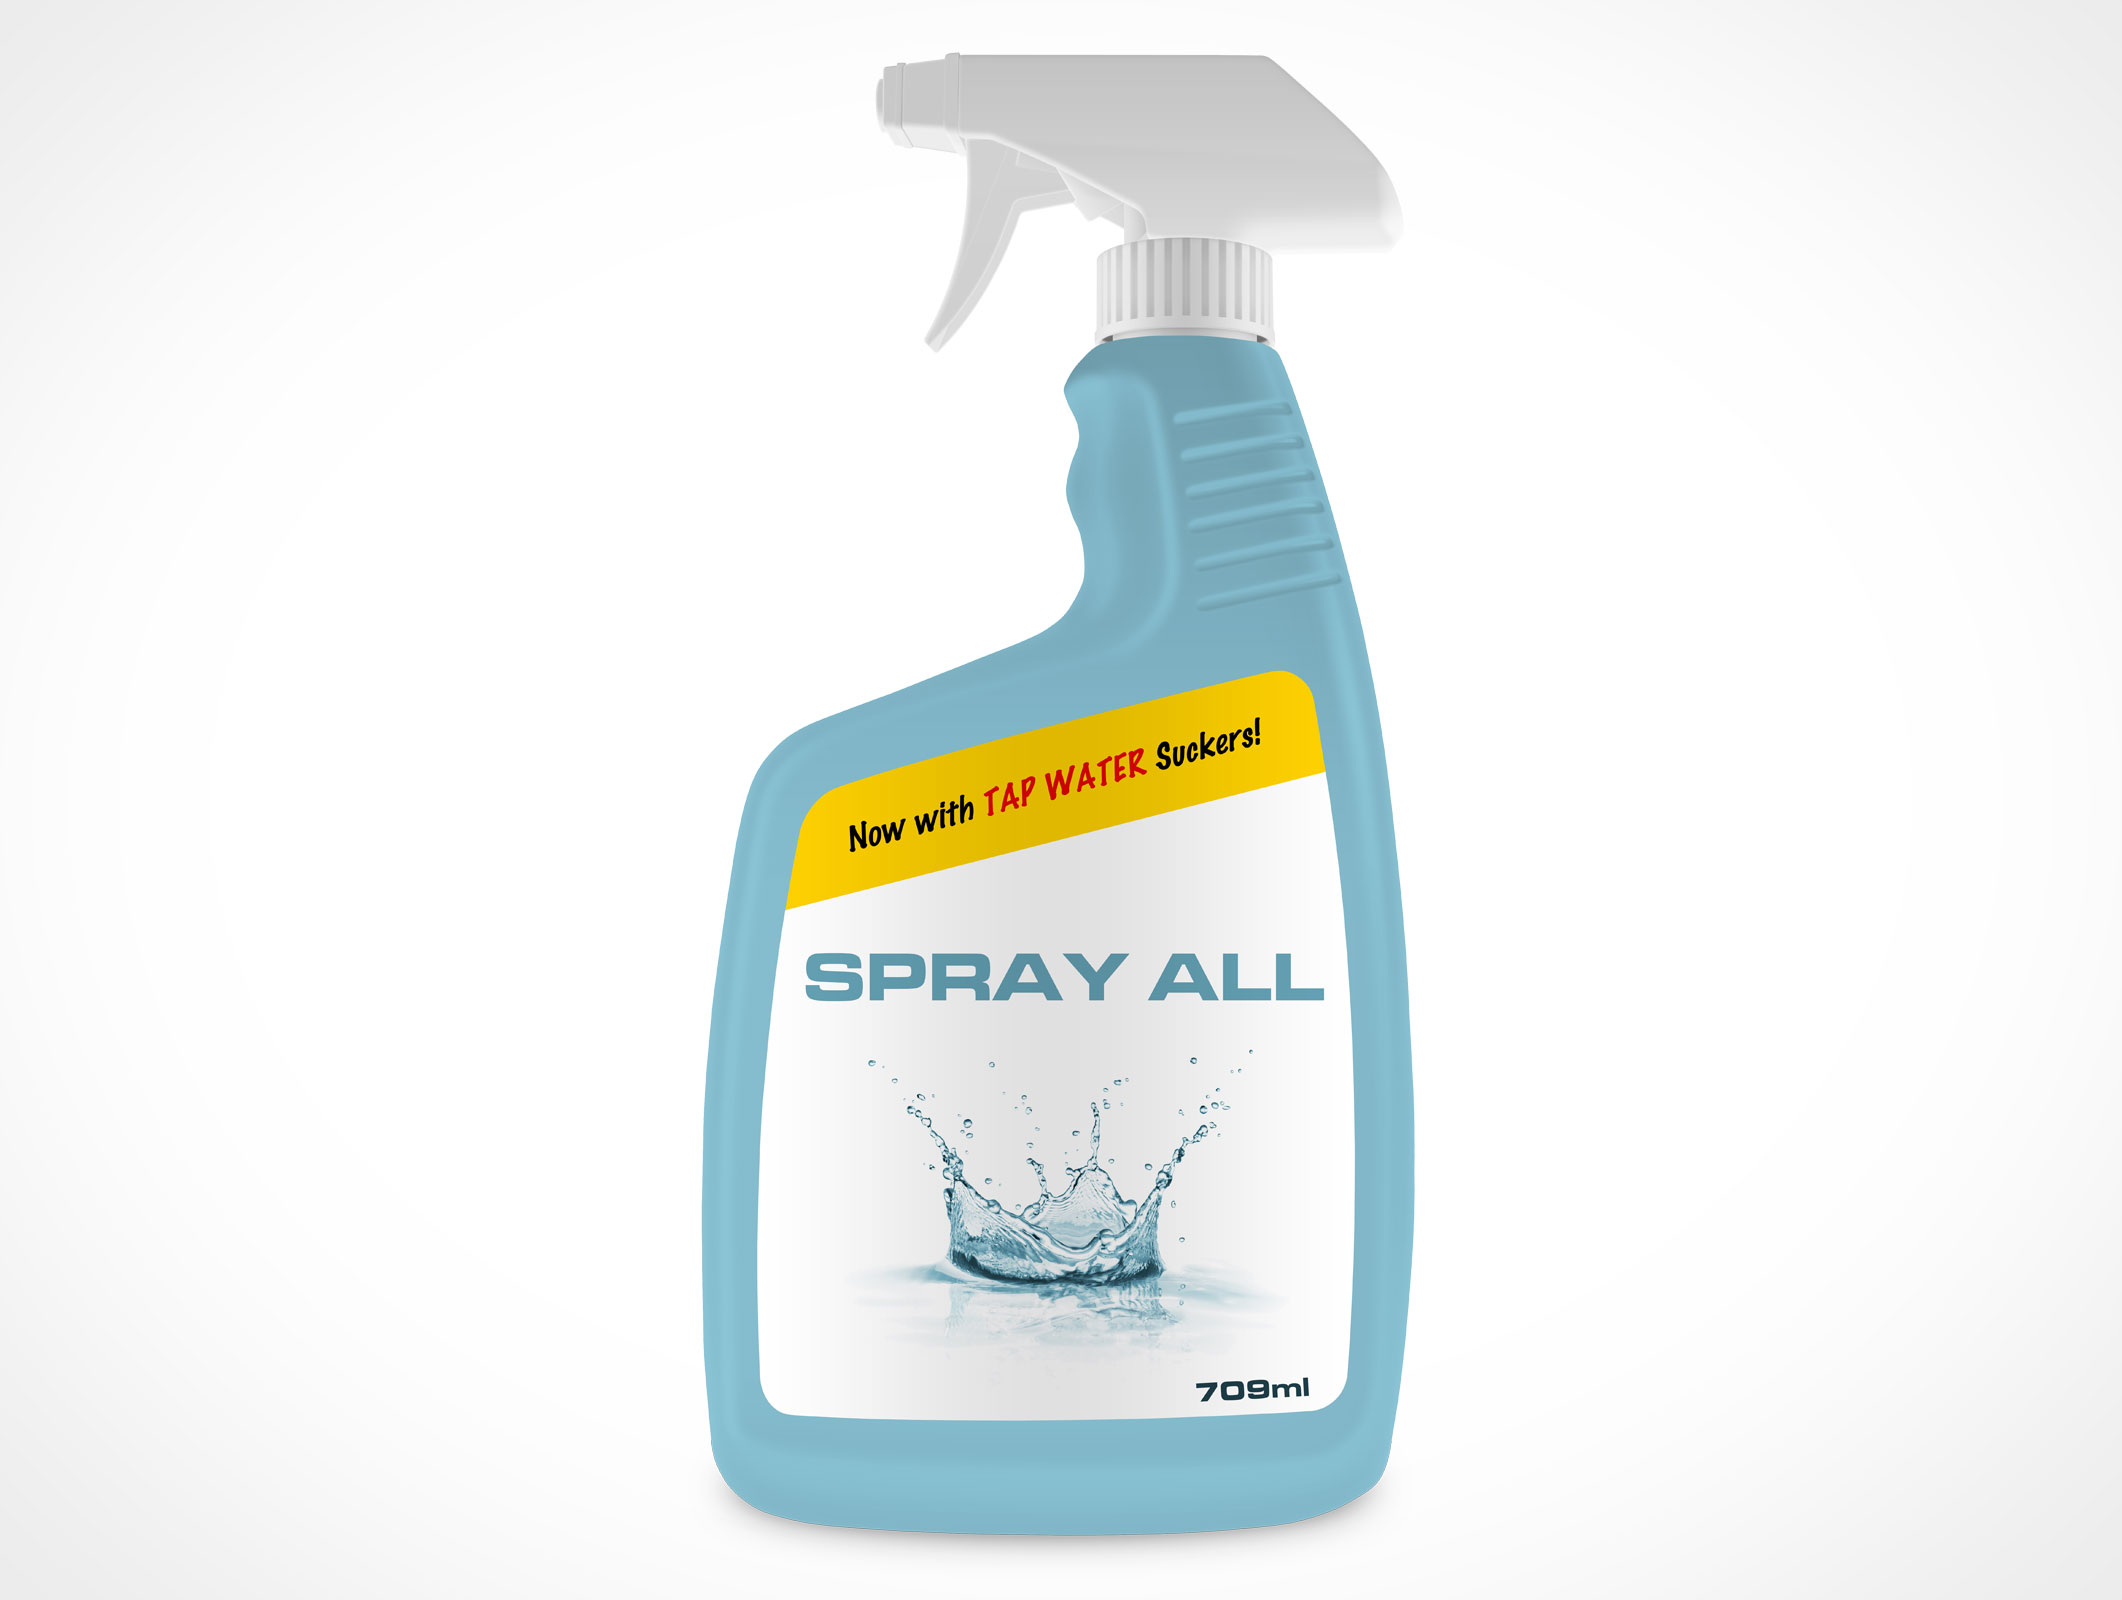 Detergent Spray Bottle Mockup 4r5